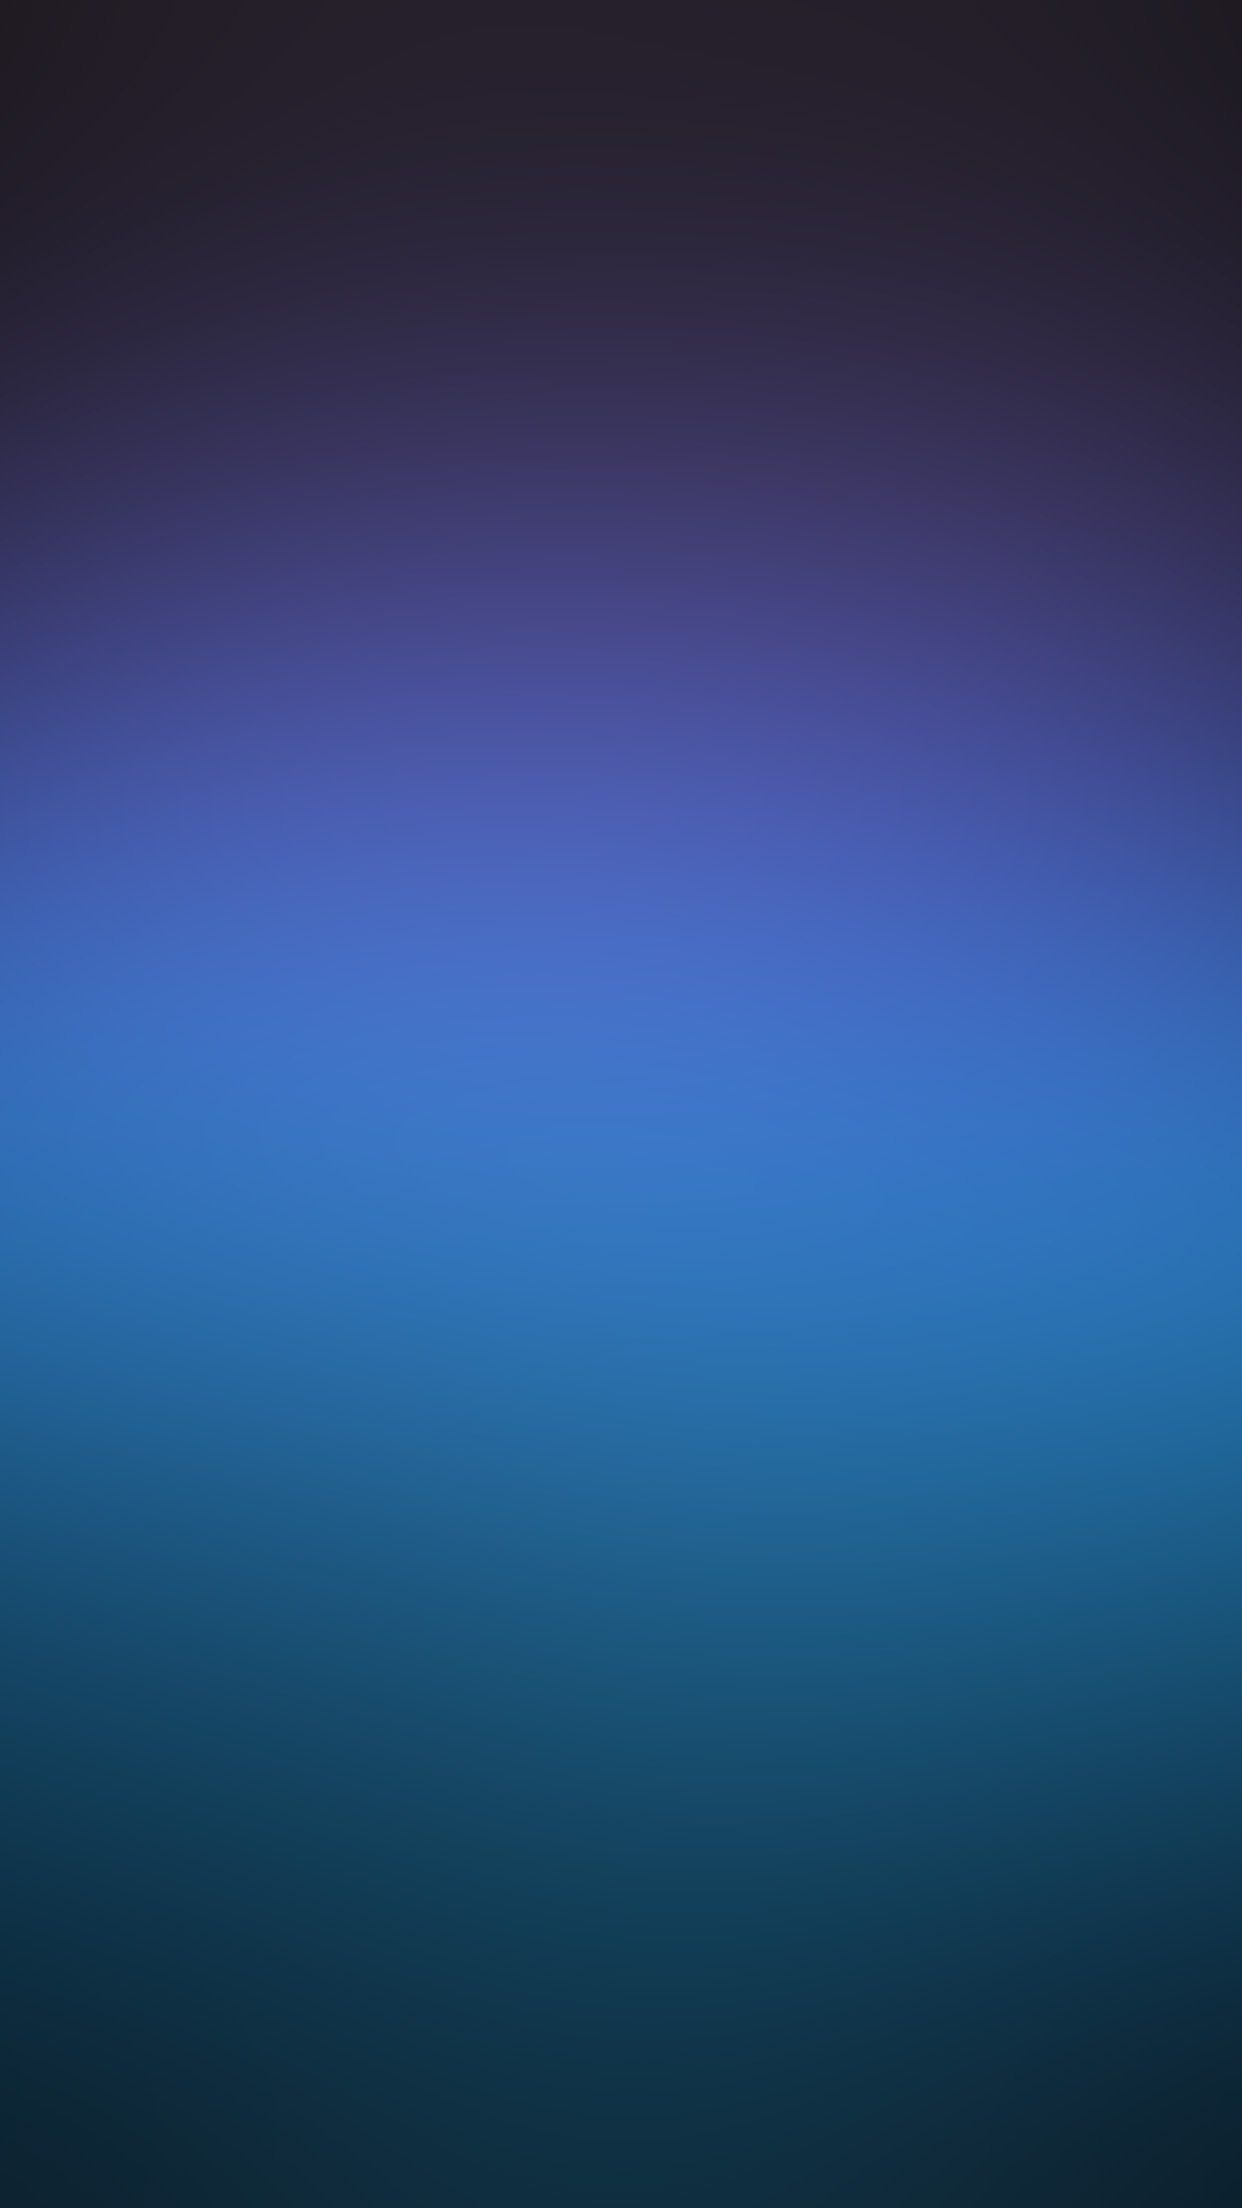 Blur Wallpaper Iphone X - HD Wallpaper 